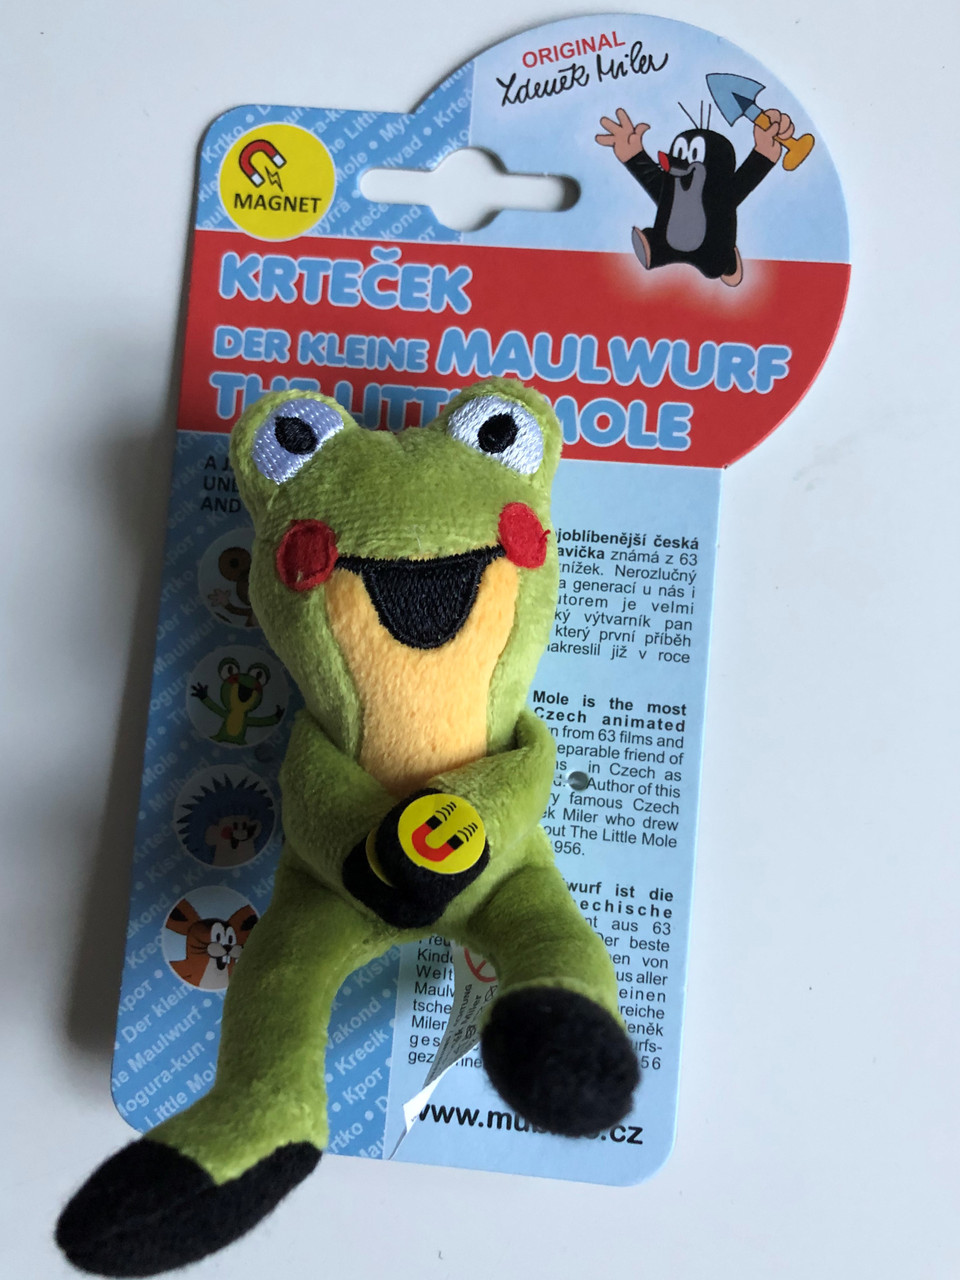 The Little Mole - Frog 12 cm magnets / Krtek a kamarádi - Žába - Žabka  magnety / Maulwurf - Frosch magneten / Kisvakond és barátai - Béka mágnes /  Krteček / Ages 3+ / The Most favourite Czech animated character -  bibleinmylanguage